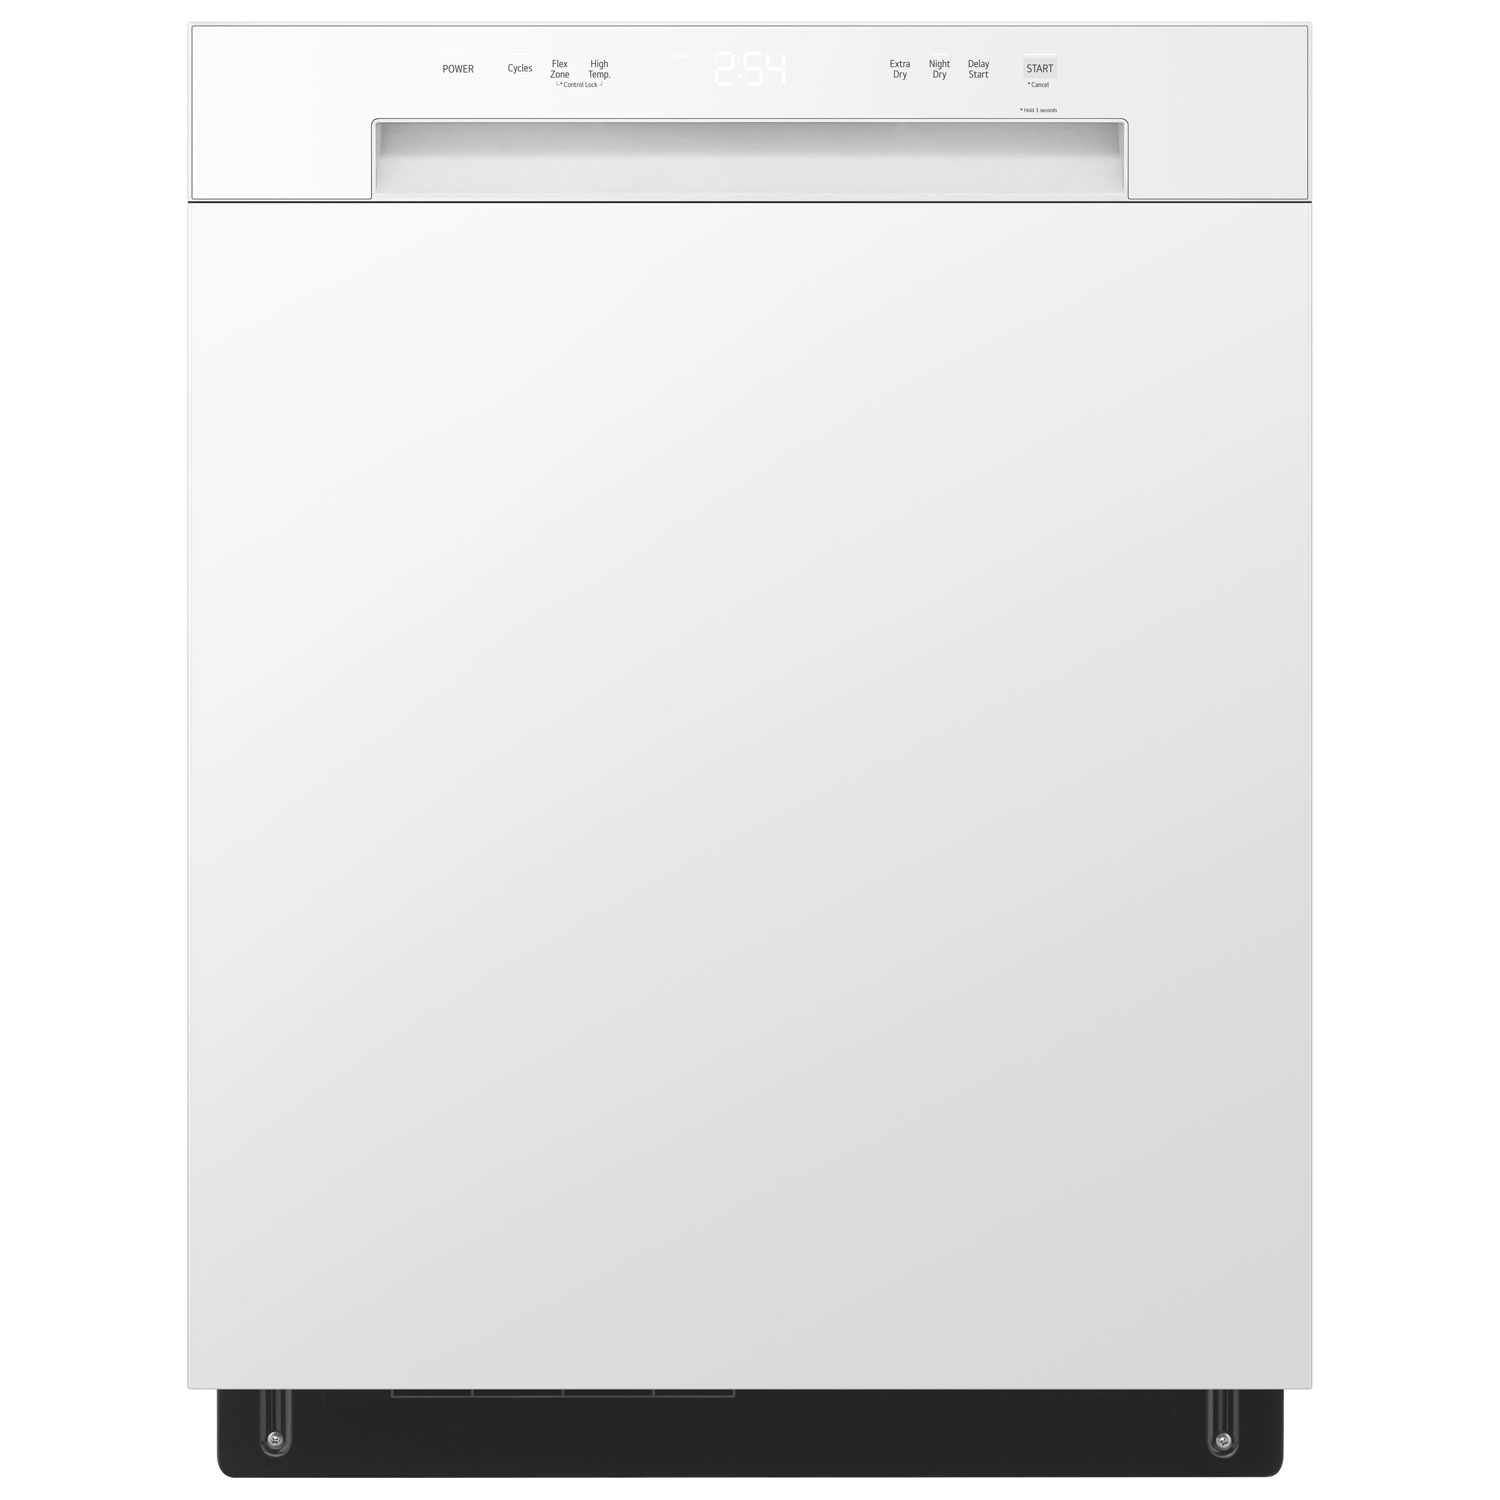 LG 24" 52dB Built-In Dishwasher (LDFC2423W) - White